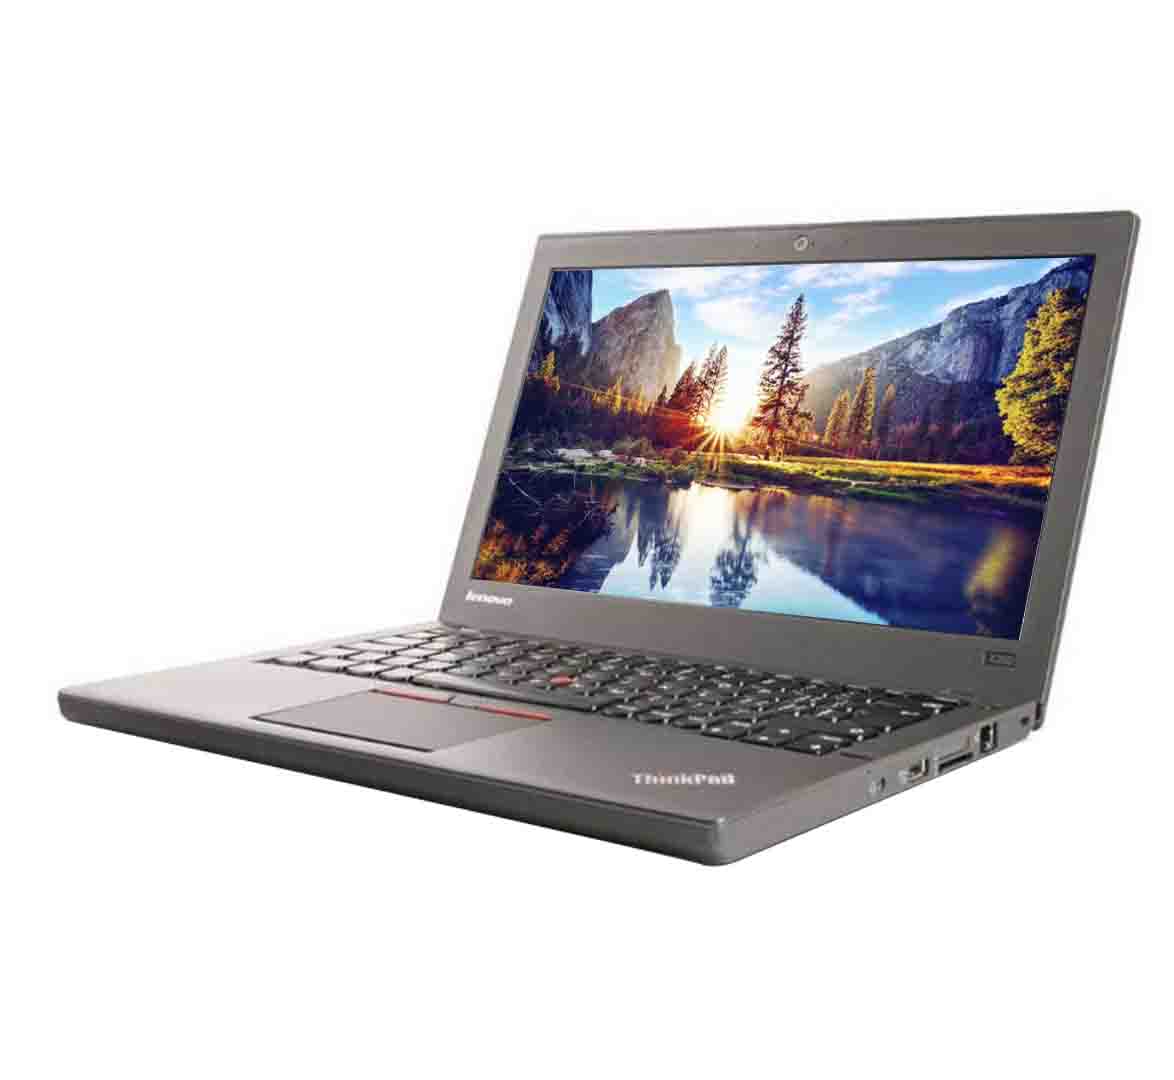 Lenovo ThinkPad X250 Business Laptop, Intel Core i5-5th Generation 